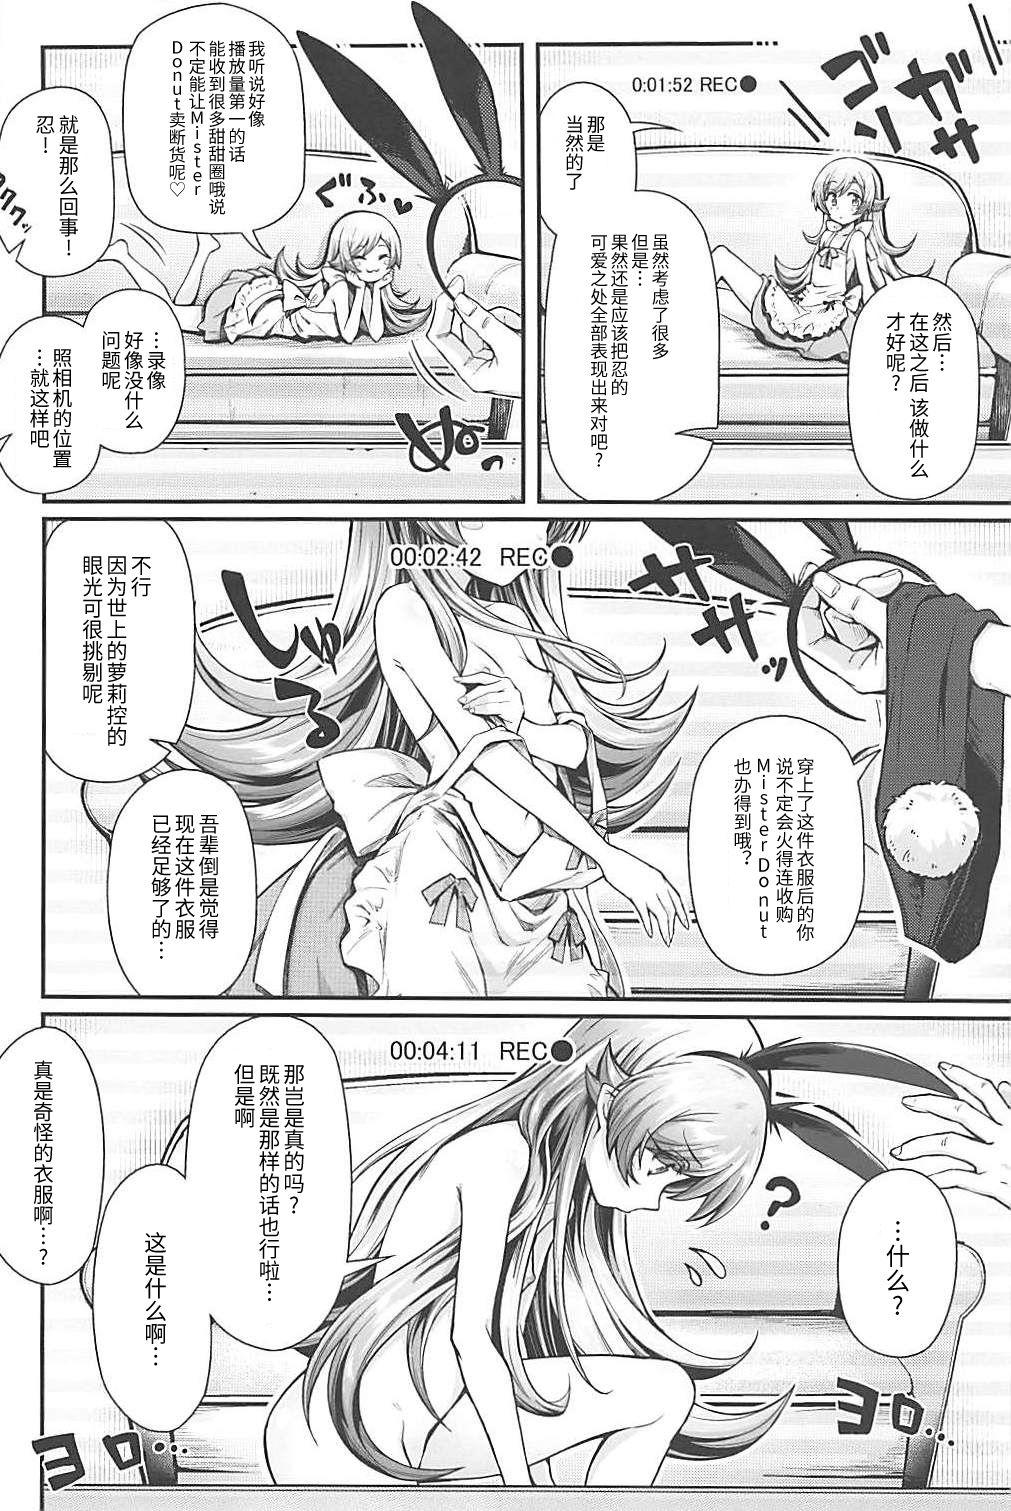 Gorgeous Pachimonogatari Part 16: Shinobu Debut - Bakemonogatari Celebrity - Page 3